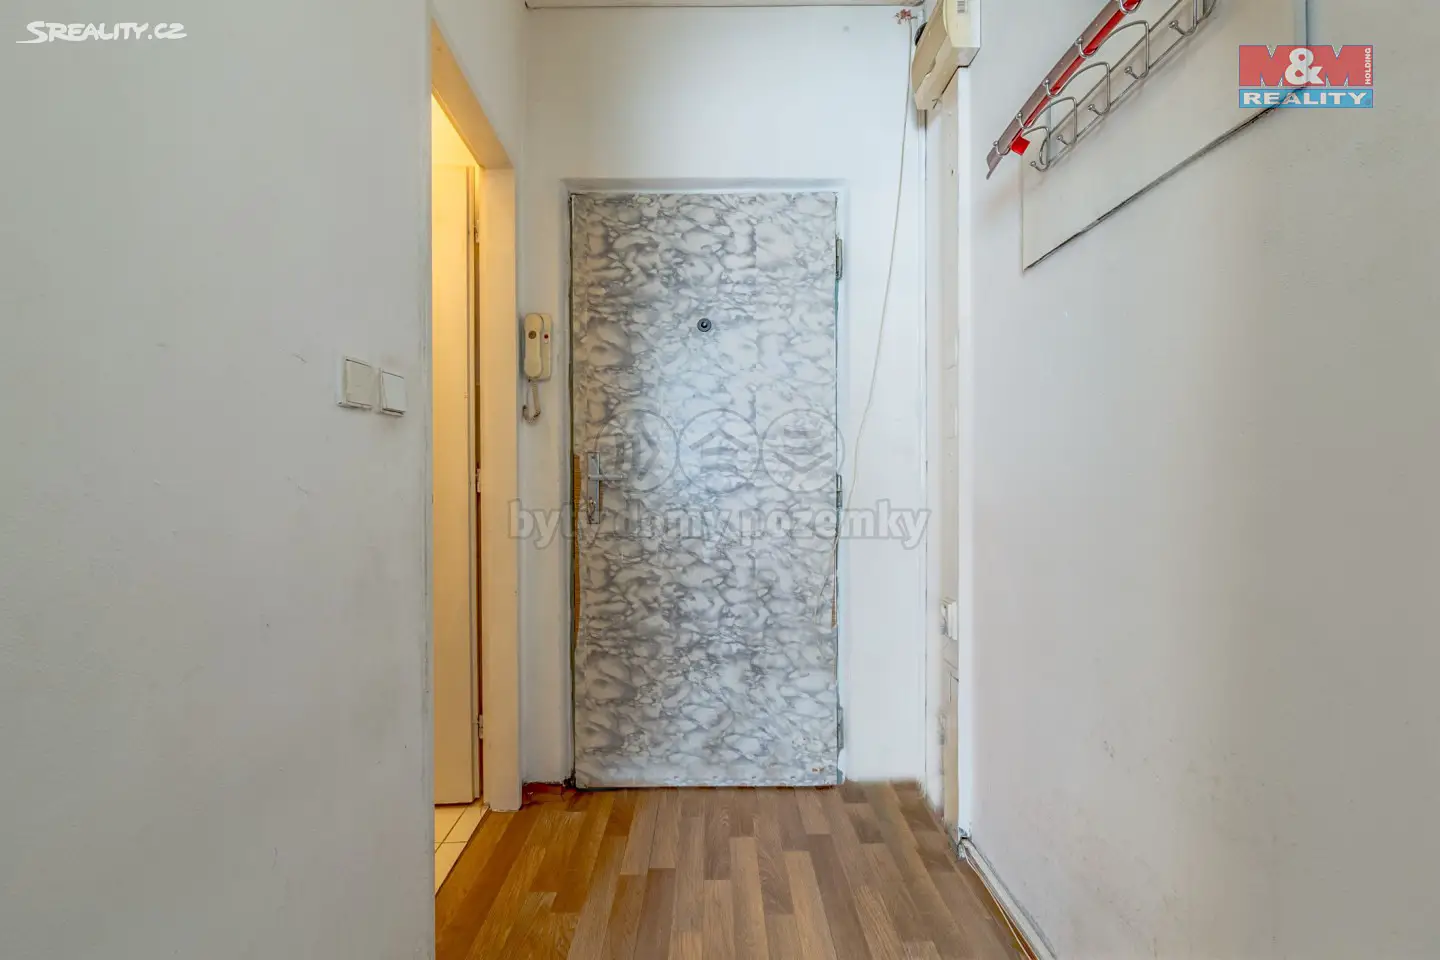 Prodej bytu 1+1 37 m², Palackého, Nový Bor